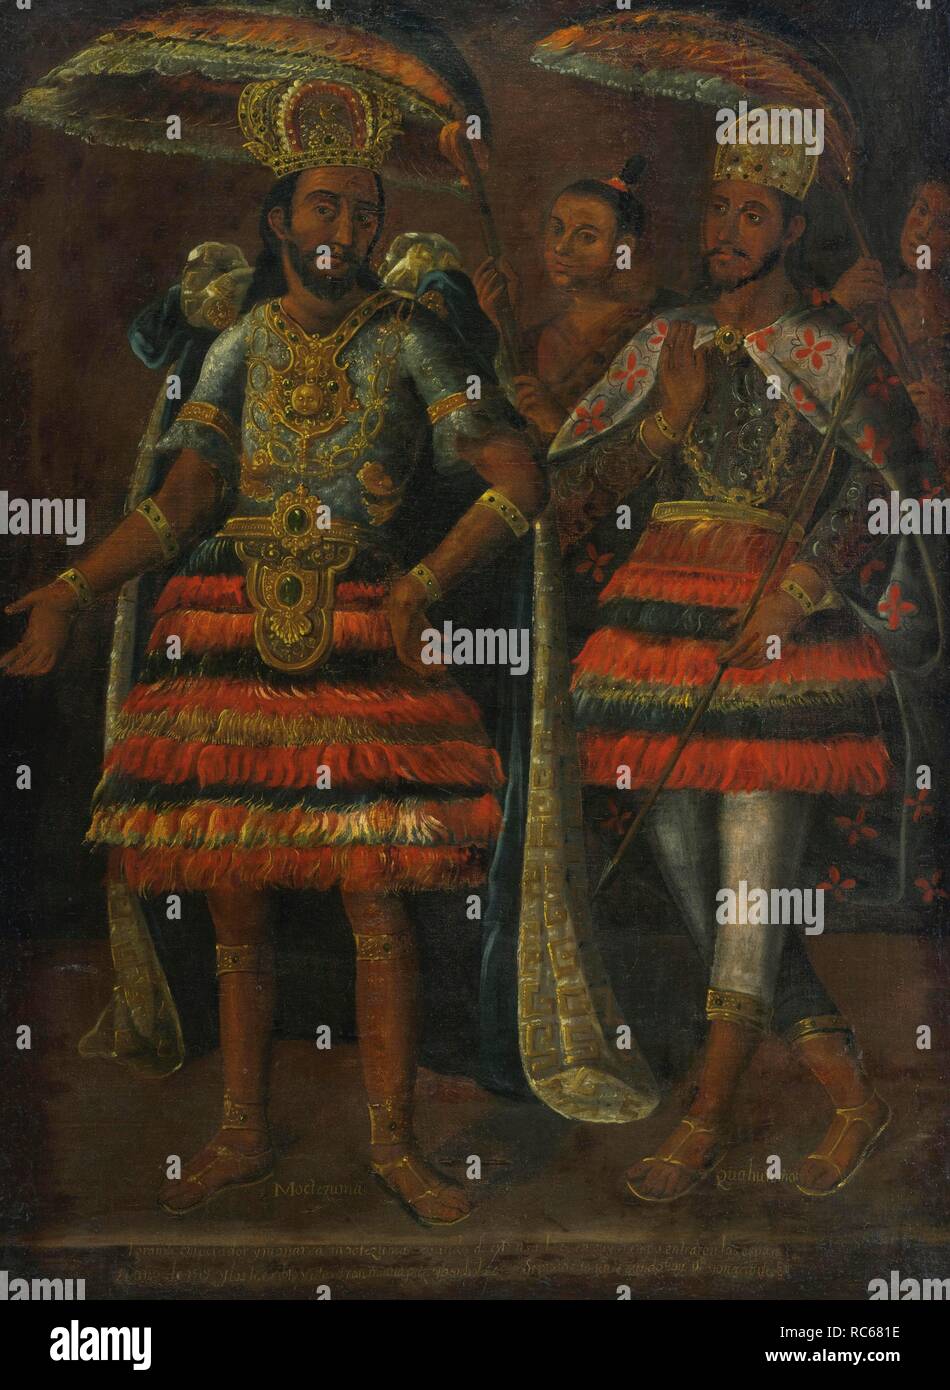 Portrait of Moctezuma and Cuauhtémoc. Museum: PRIVATE COLLECTION. Author: ANONYMOUS. Stock Photo